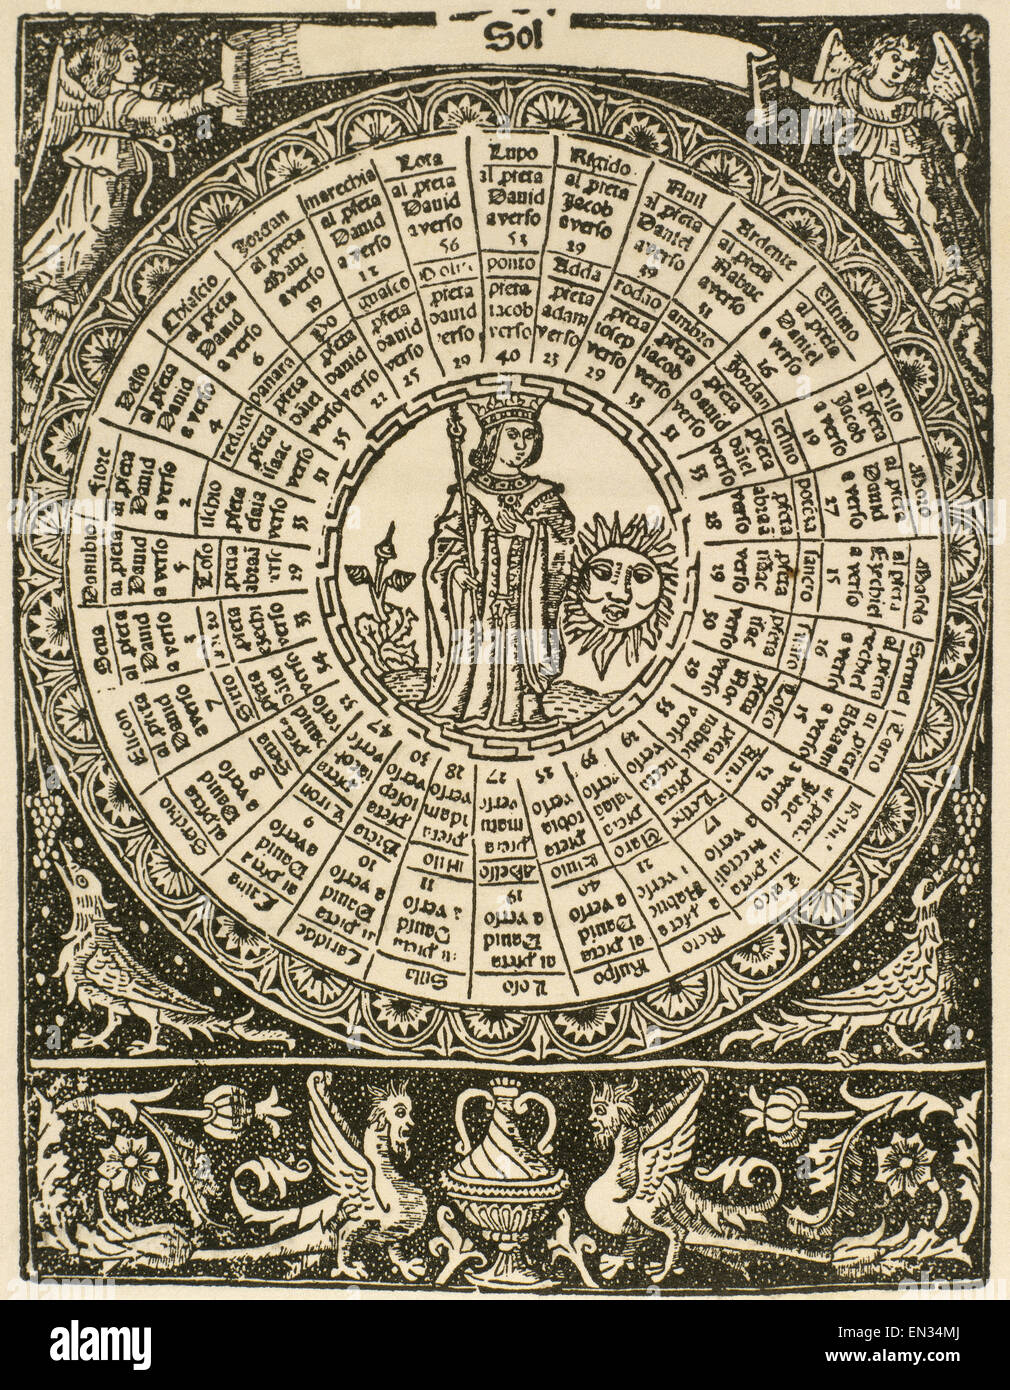 Le Soleil. L'illustration. Libro del Juego del las Suertes. Practicas augurales de Jordi Costilla, 1515. La gravure. Banque D'Images